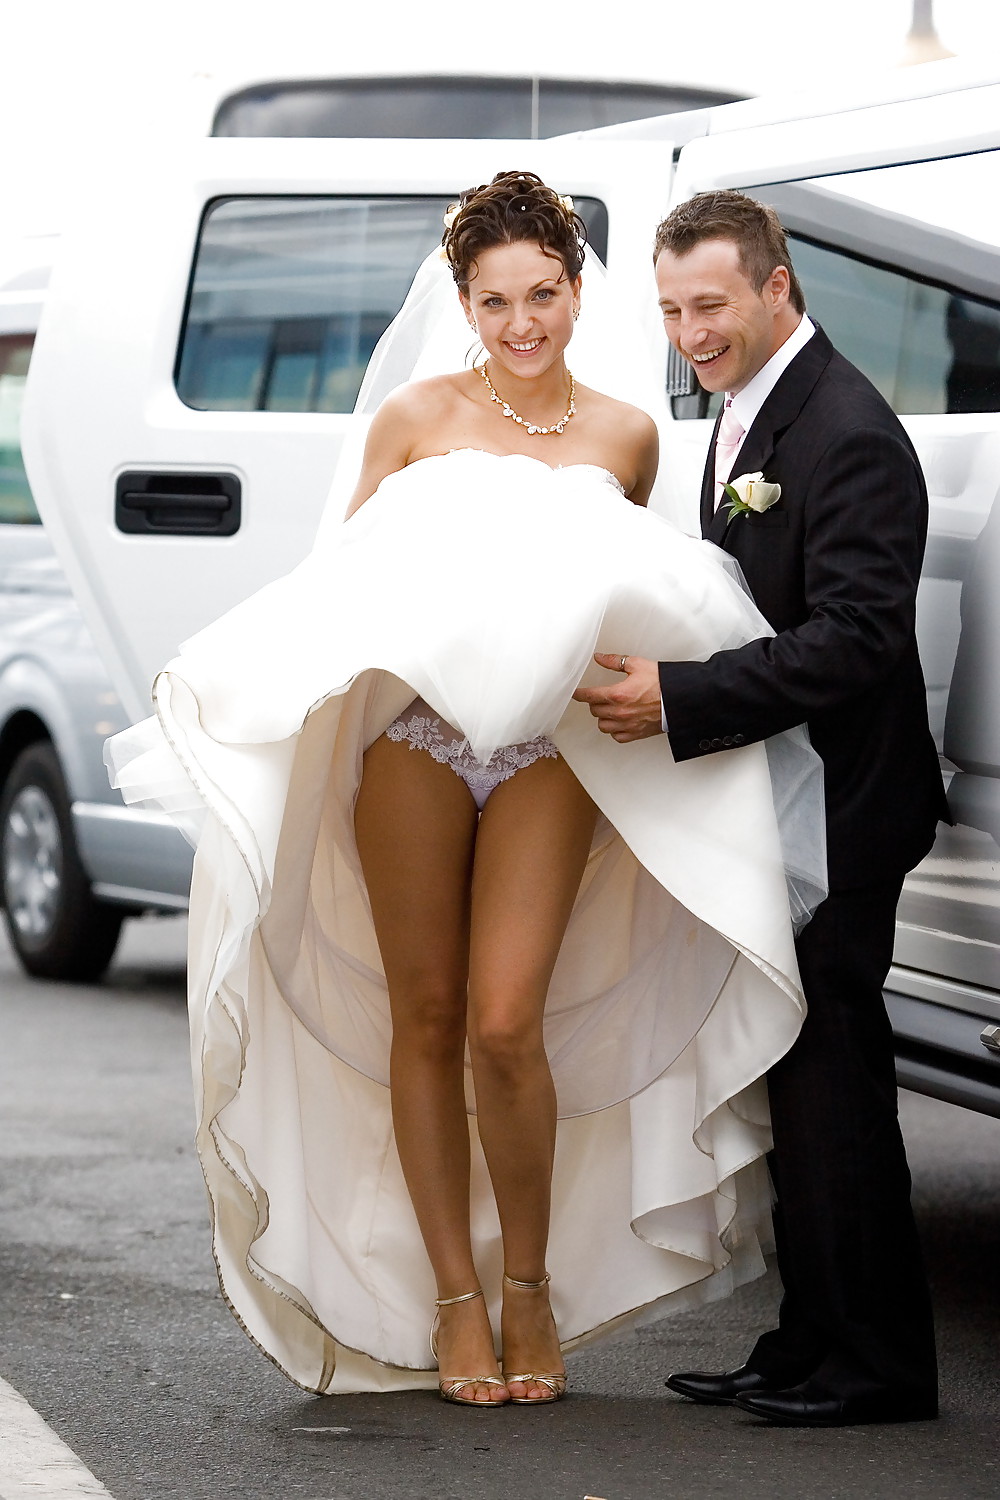 Sex BRIDES wedding voyeur upskirt white panties and bra image 39073939